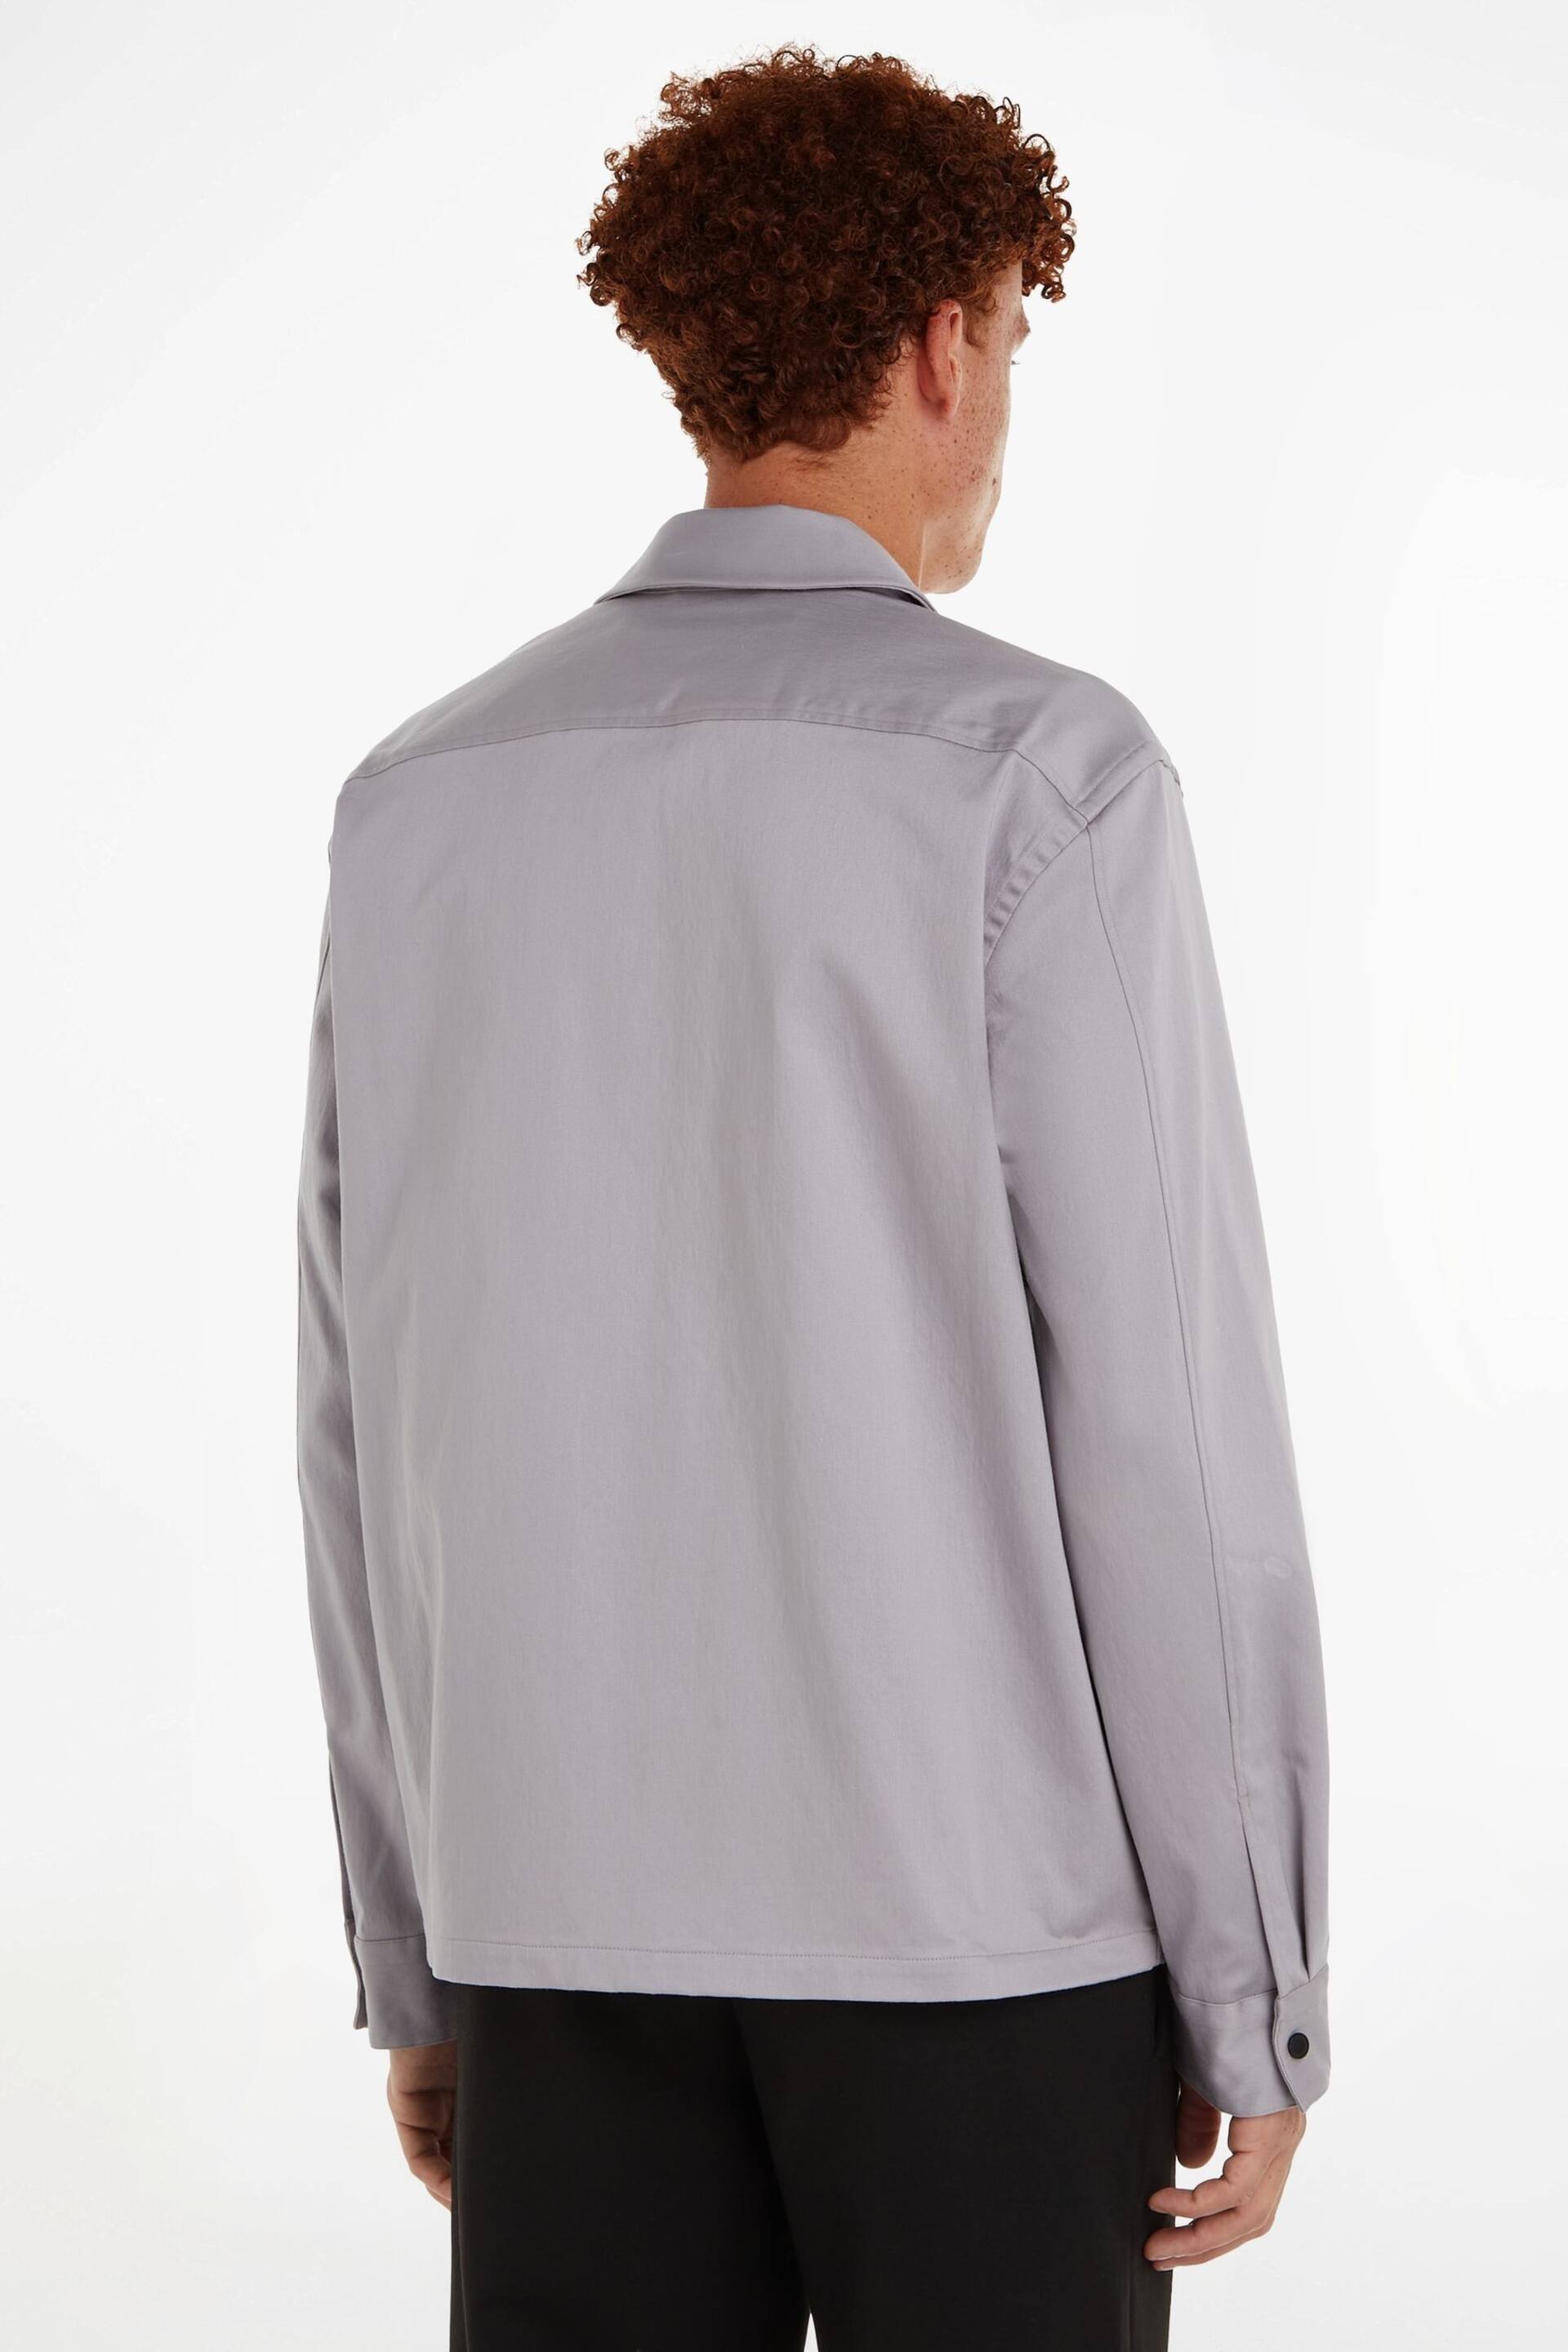 Calvin Klein Grey 3D Pocket Overshirt - Image 2 of 6